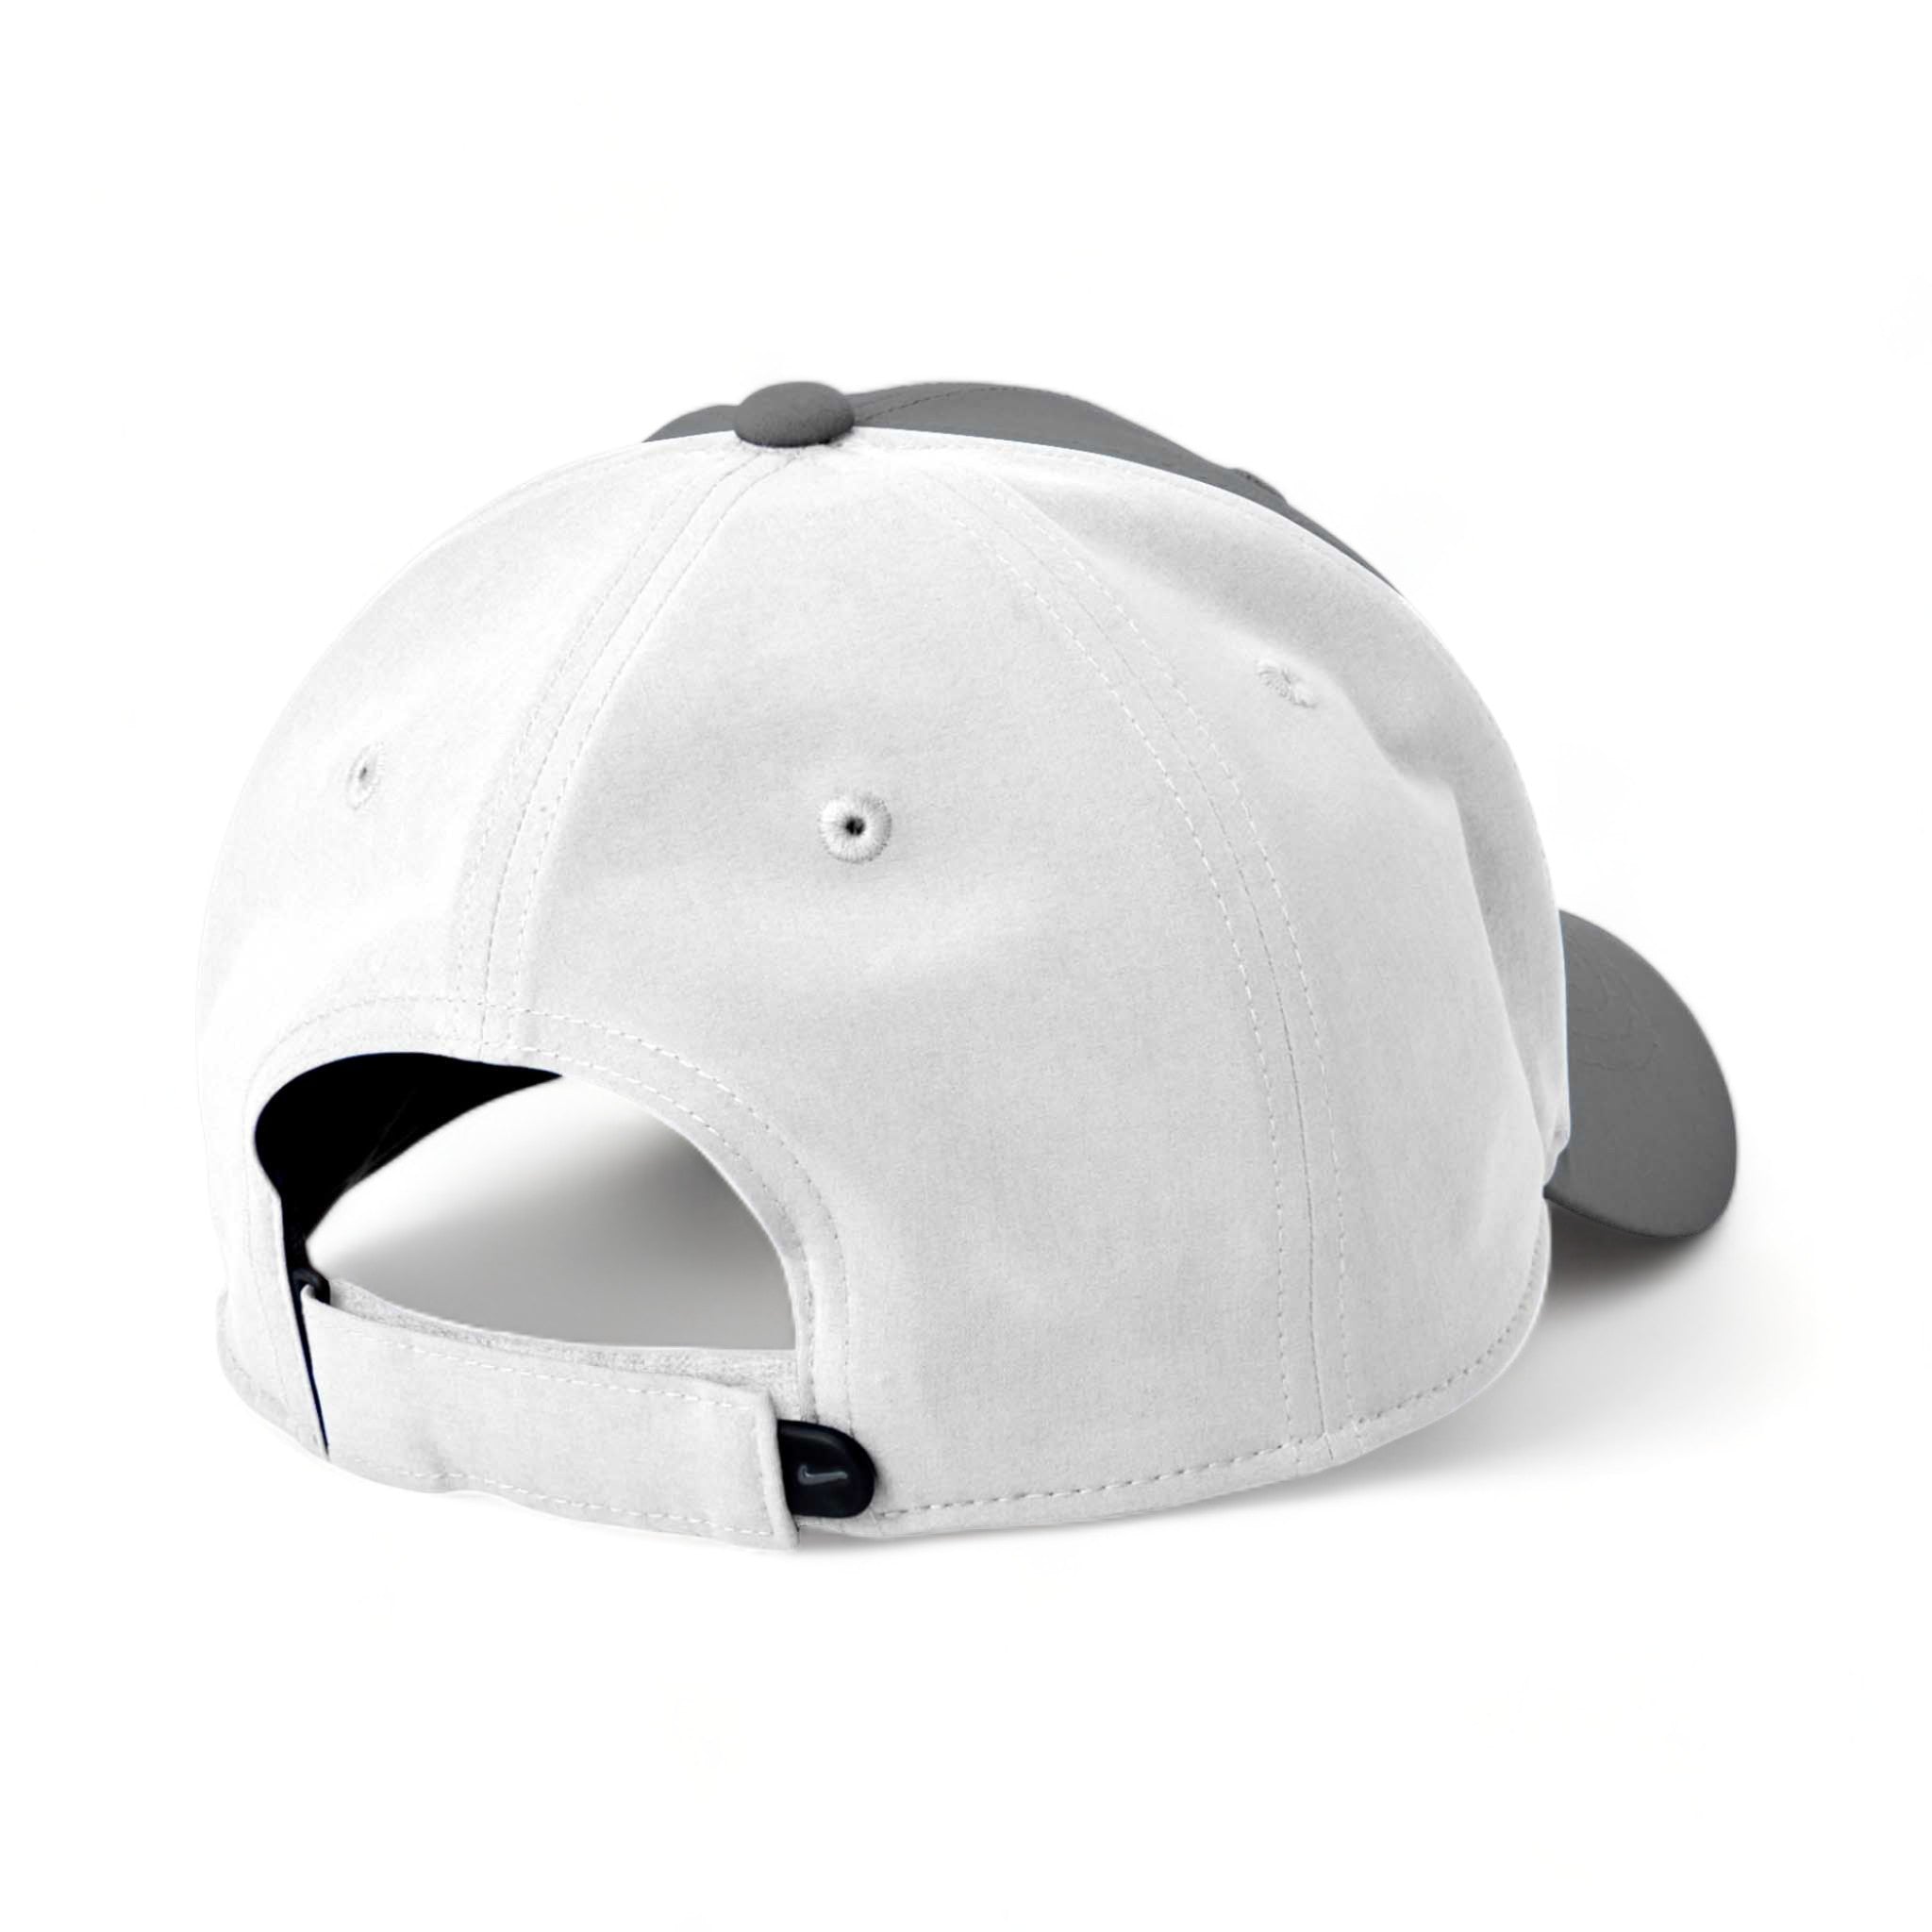 Back view of Nike NKFB6447 custom hat in dark grey and white